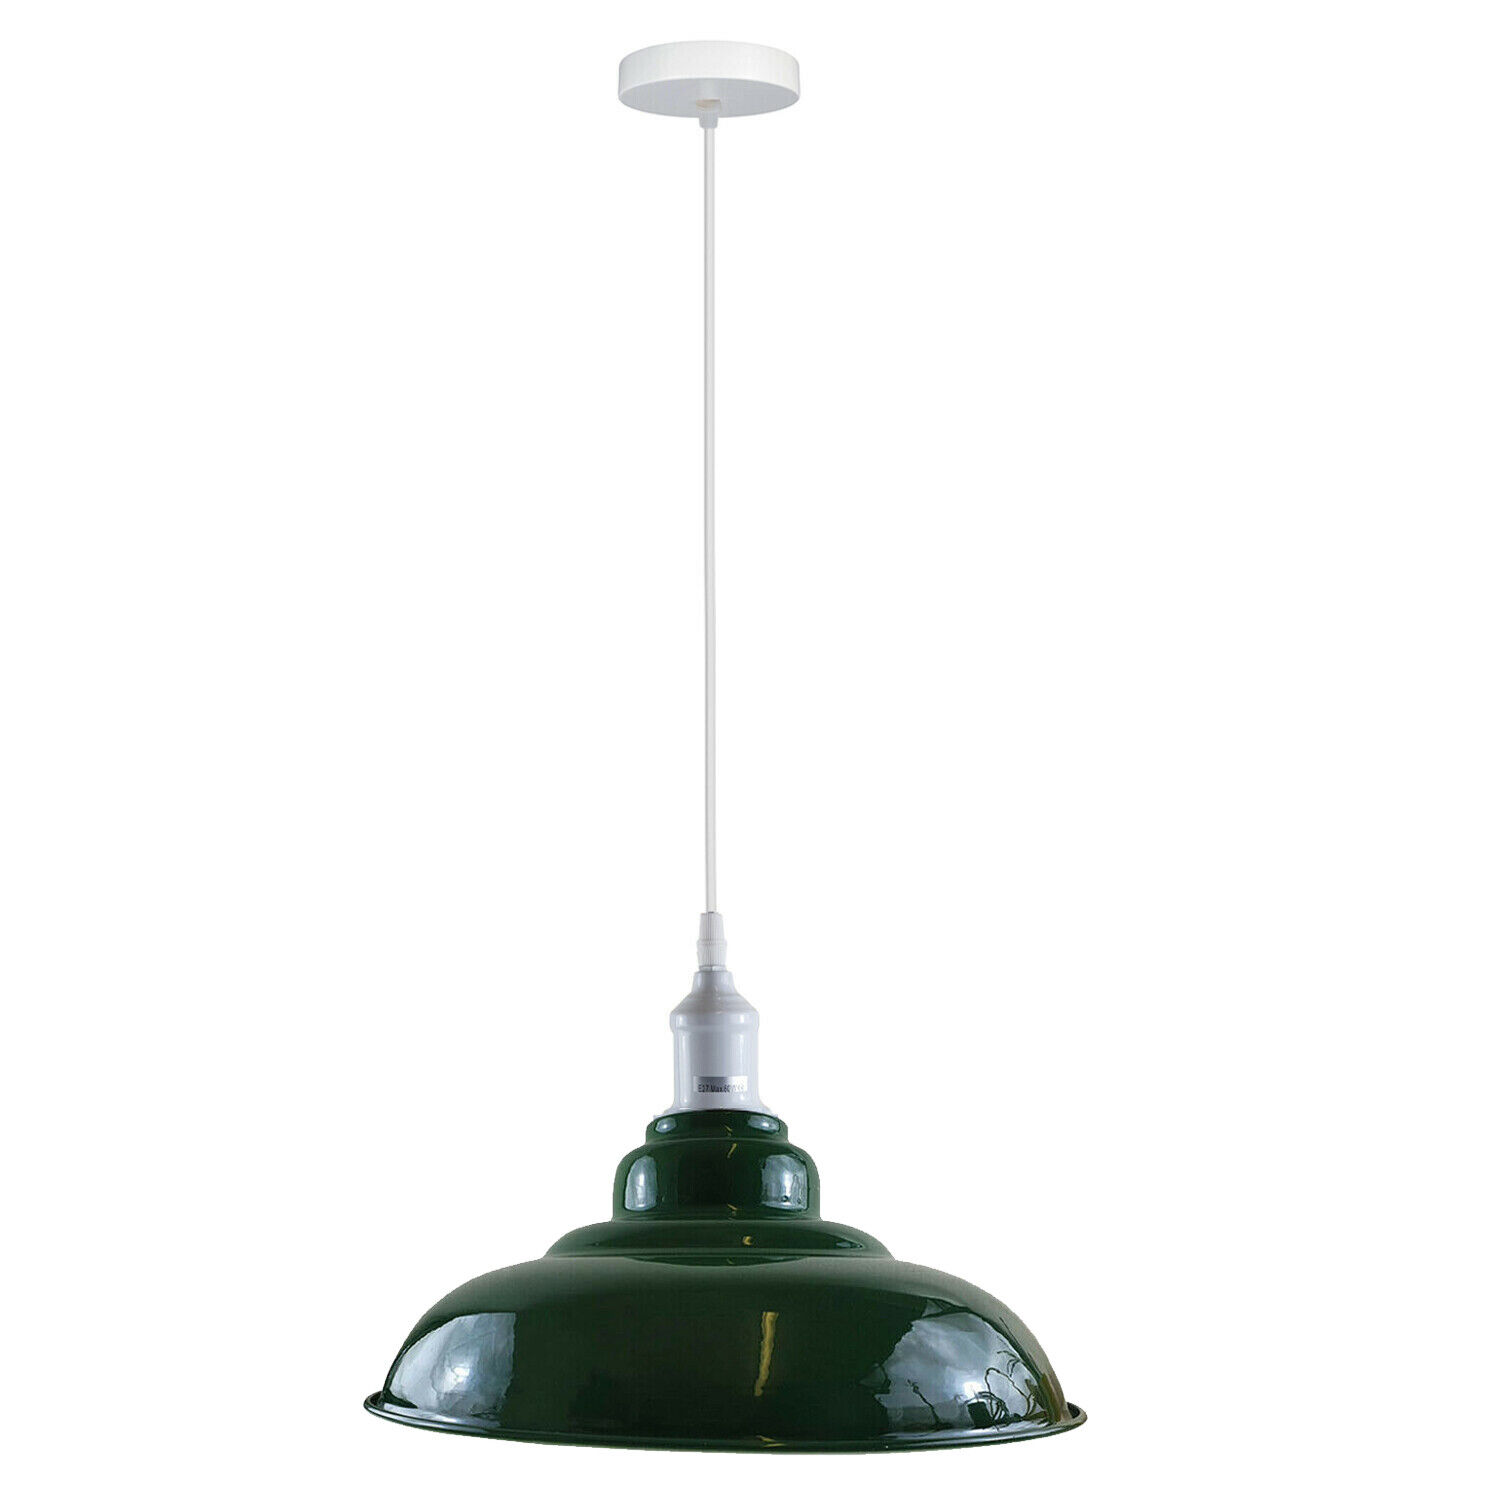 Vintage Industrial Metal Hanging Pendant Light Room Ceiling Lamp Easy Install